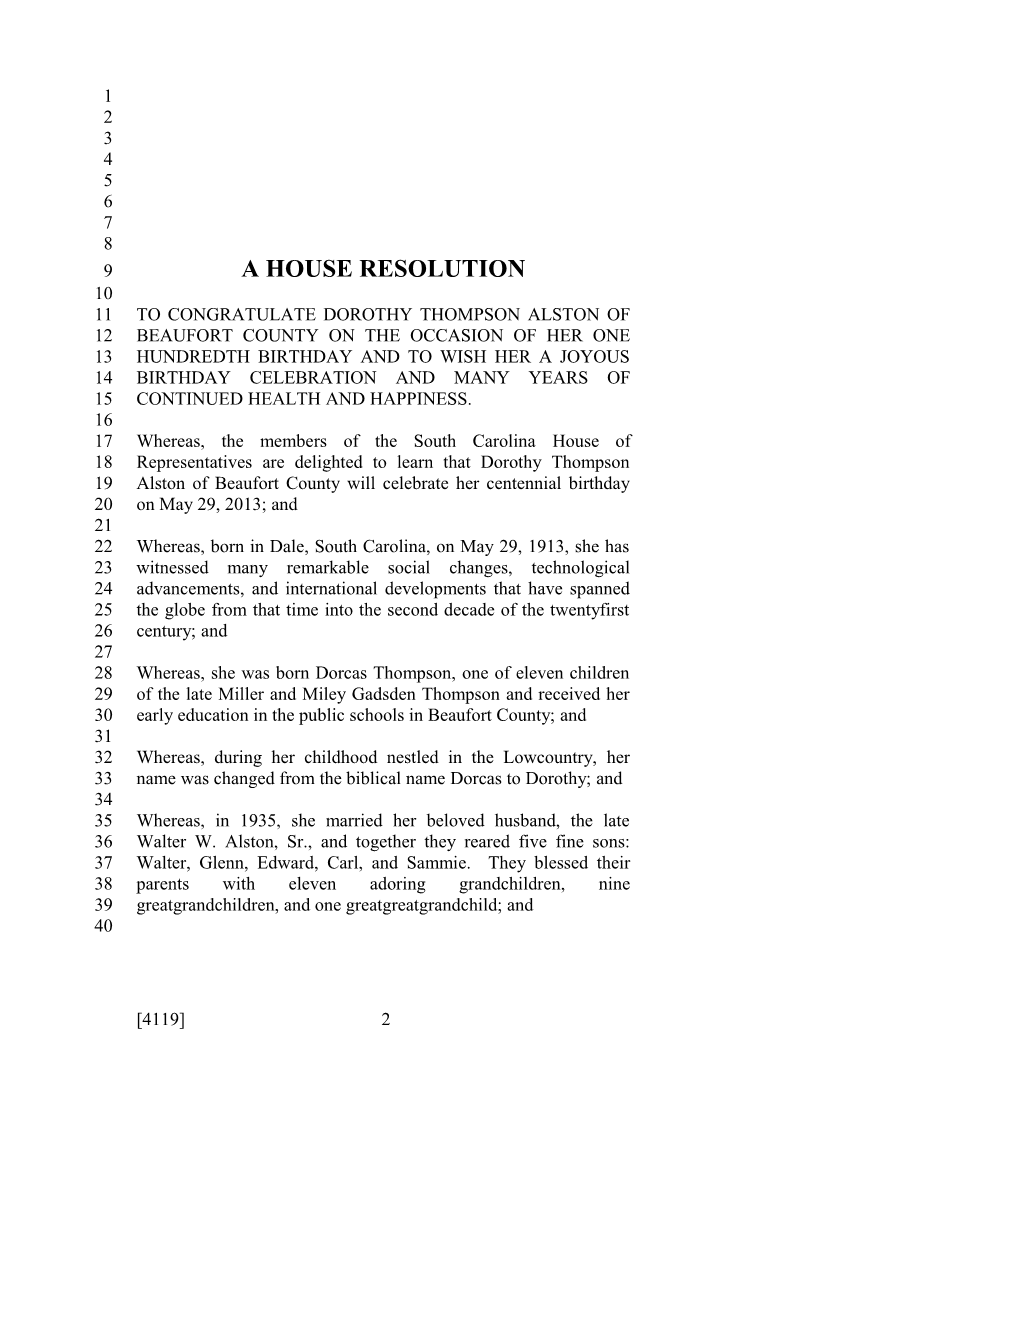 2013-2014 Bill 4119: Dorothy Thompson Alston - South Carolina Legislature Online